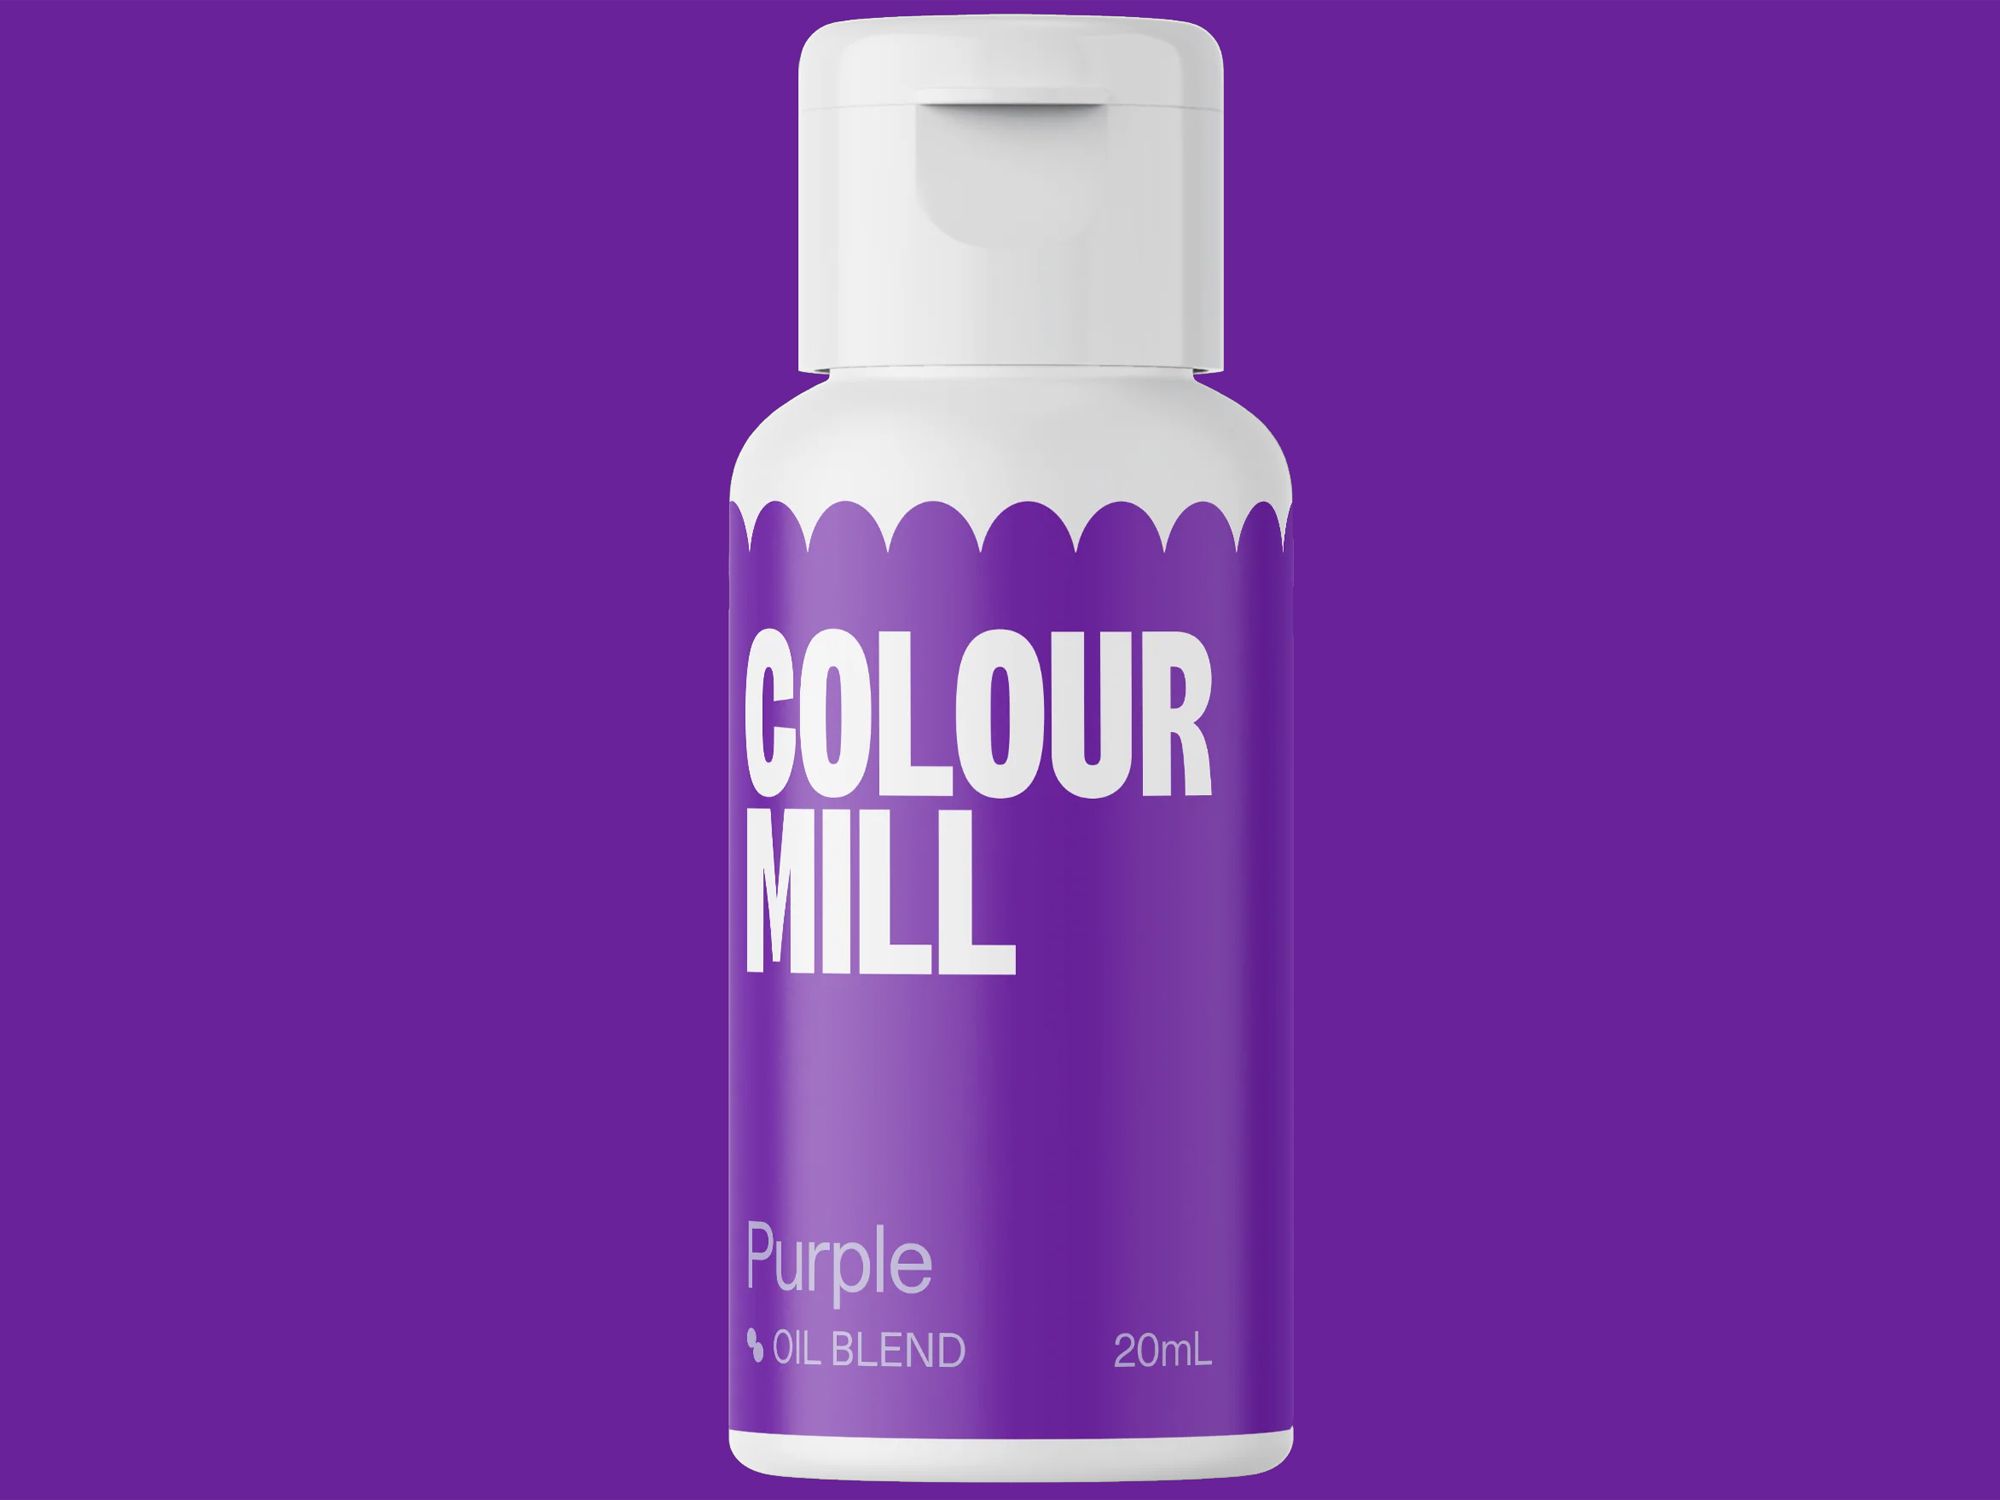 Colour Mill Purple (Oil Blend) 20ml